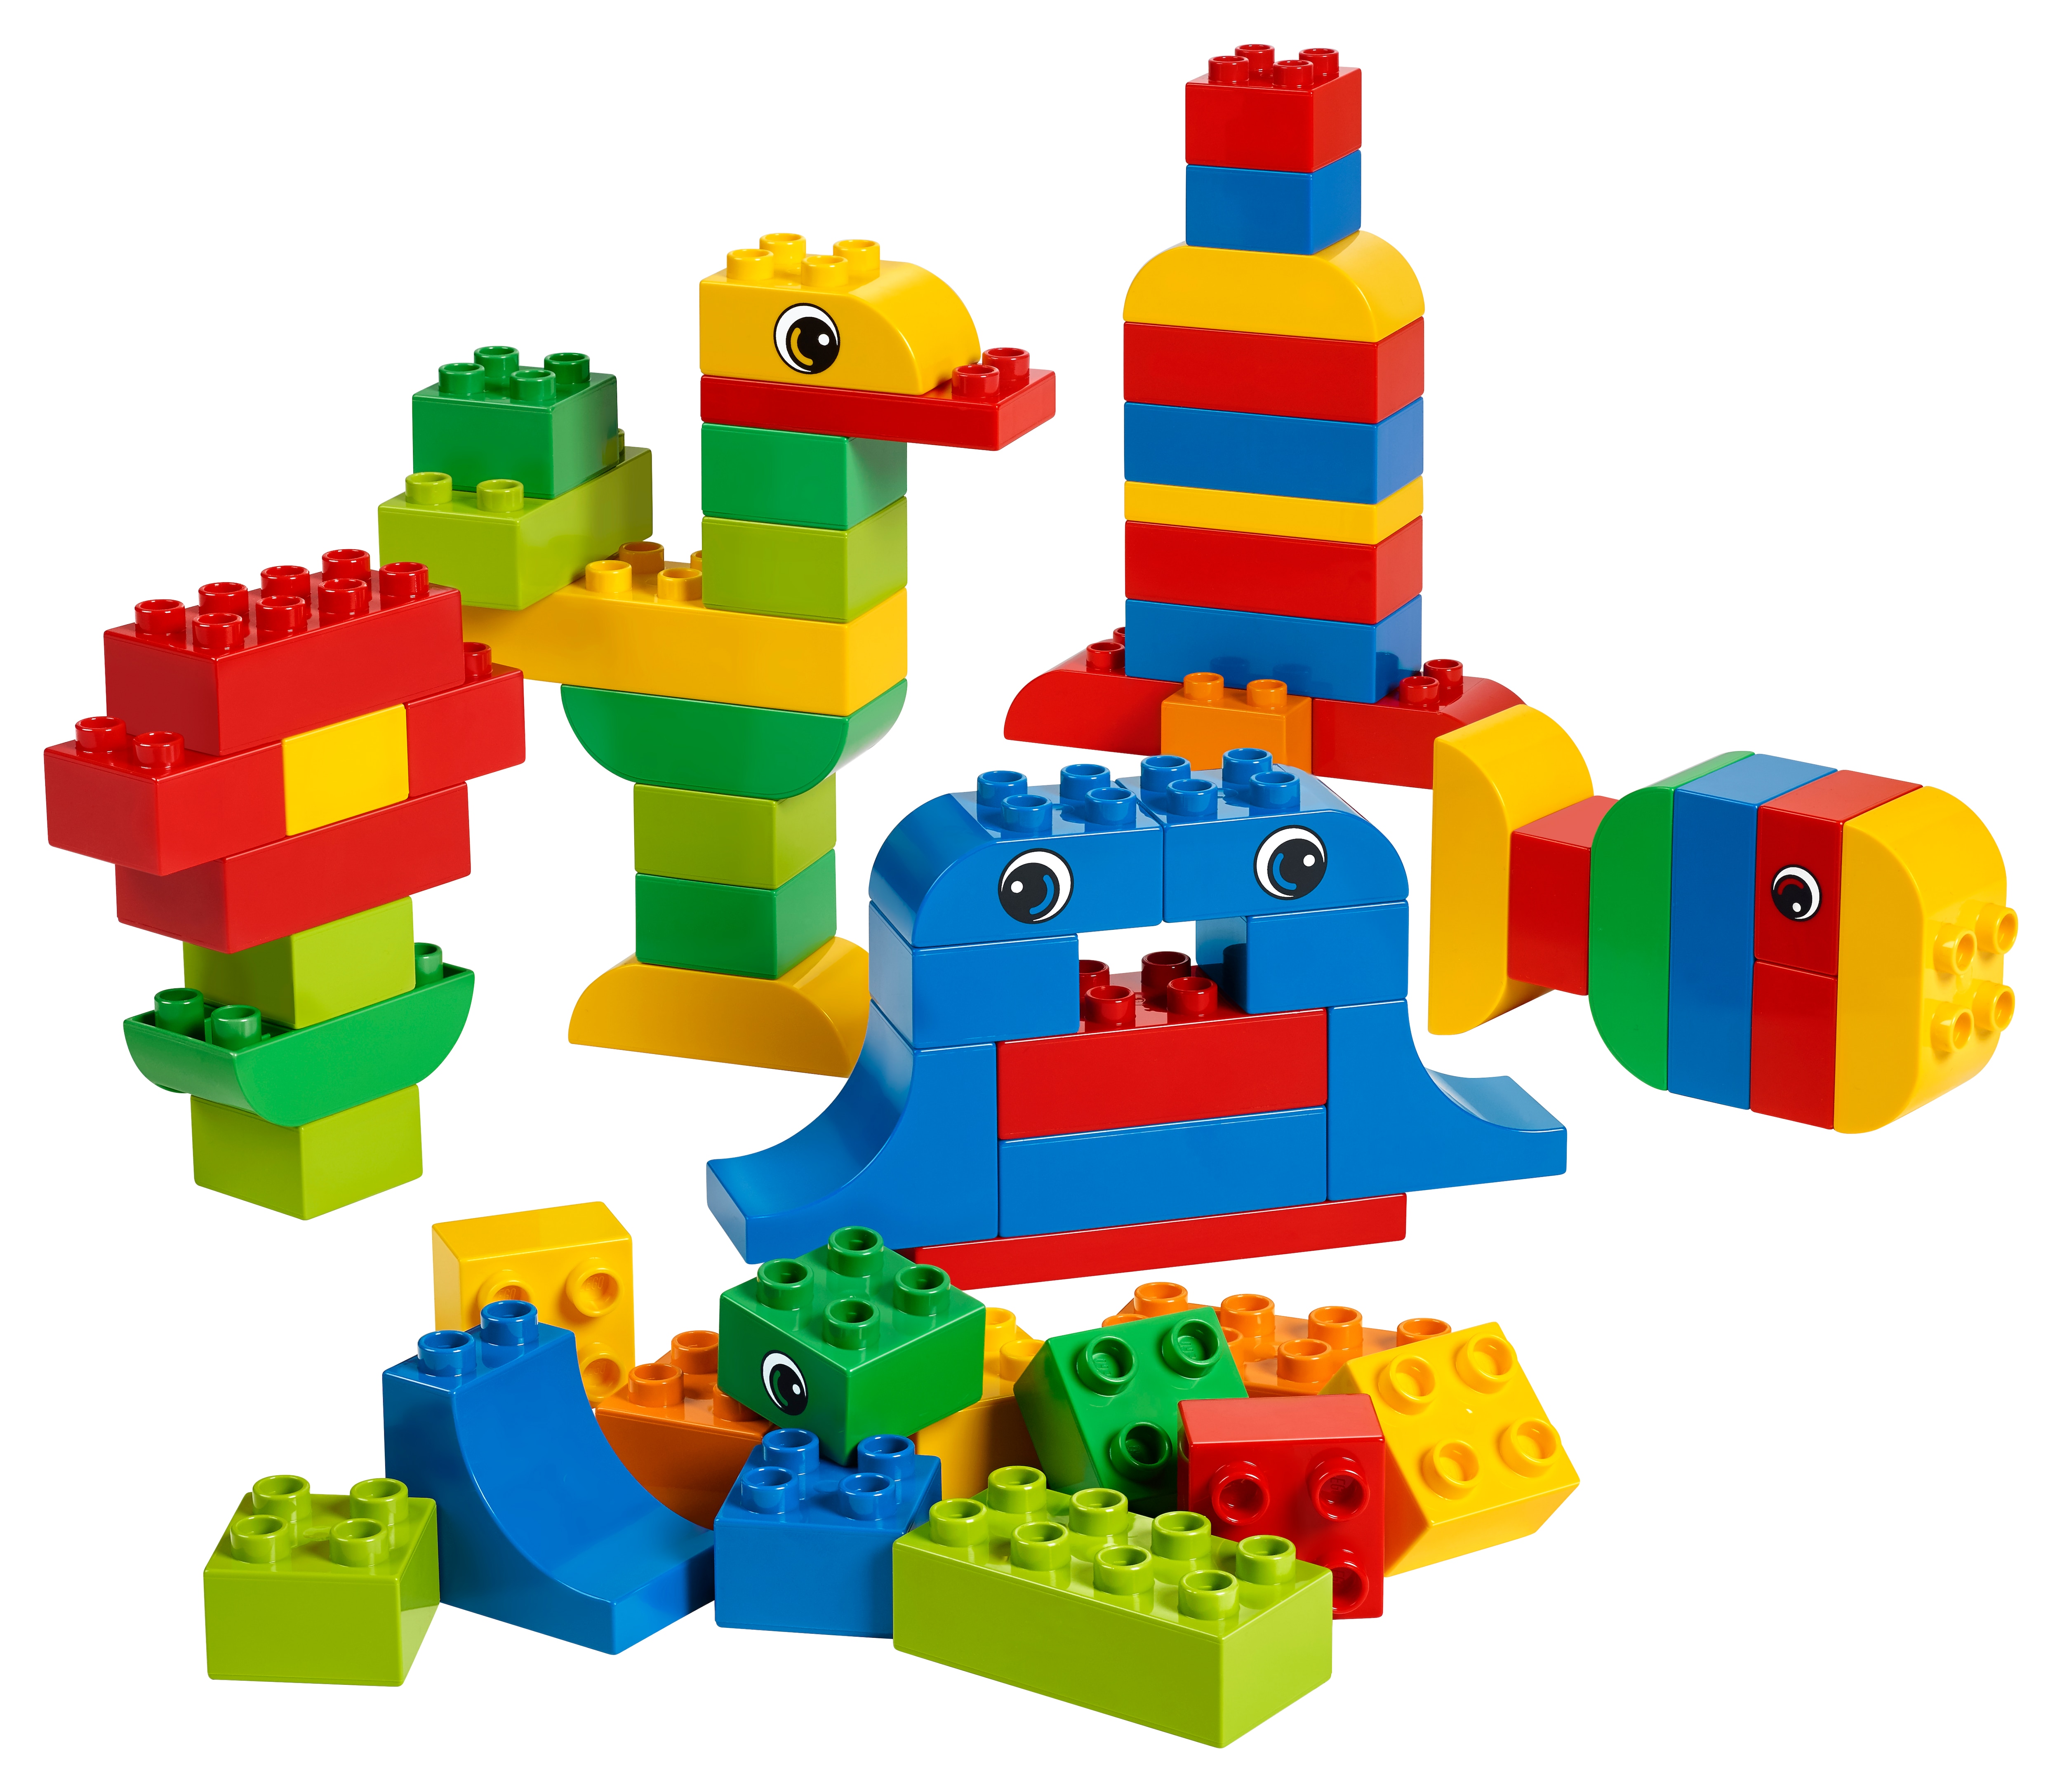 4 x LEGO red slope brick ref 3676 Set 7419 5590 6597 10159 4539 5764 ....